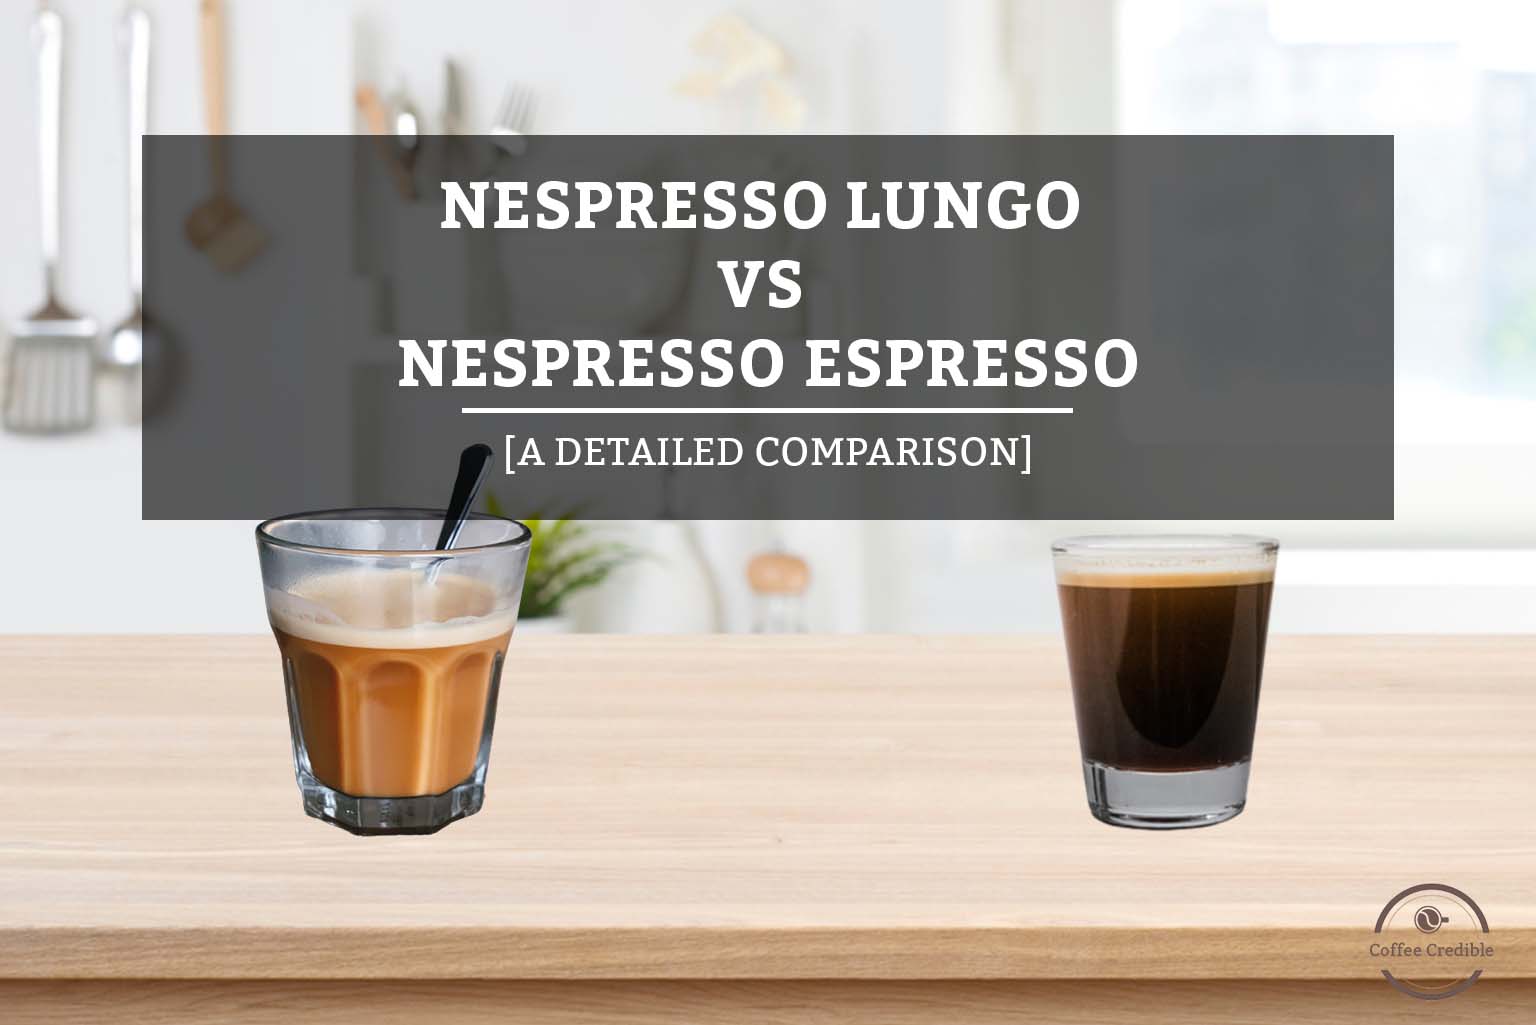 Nespresso Lungo Vs Nespresso Espresso [A Detailed Comparison]